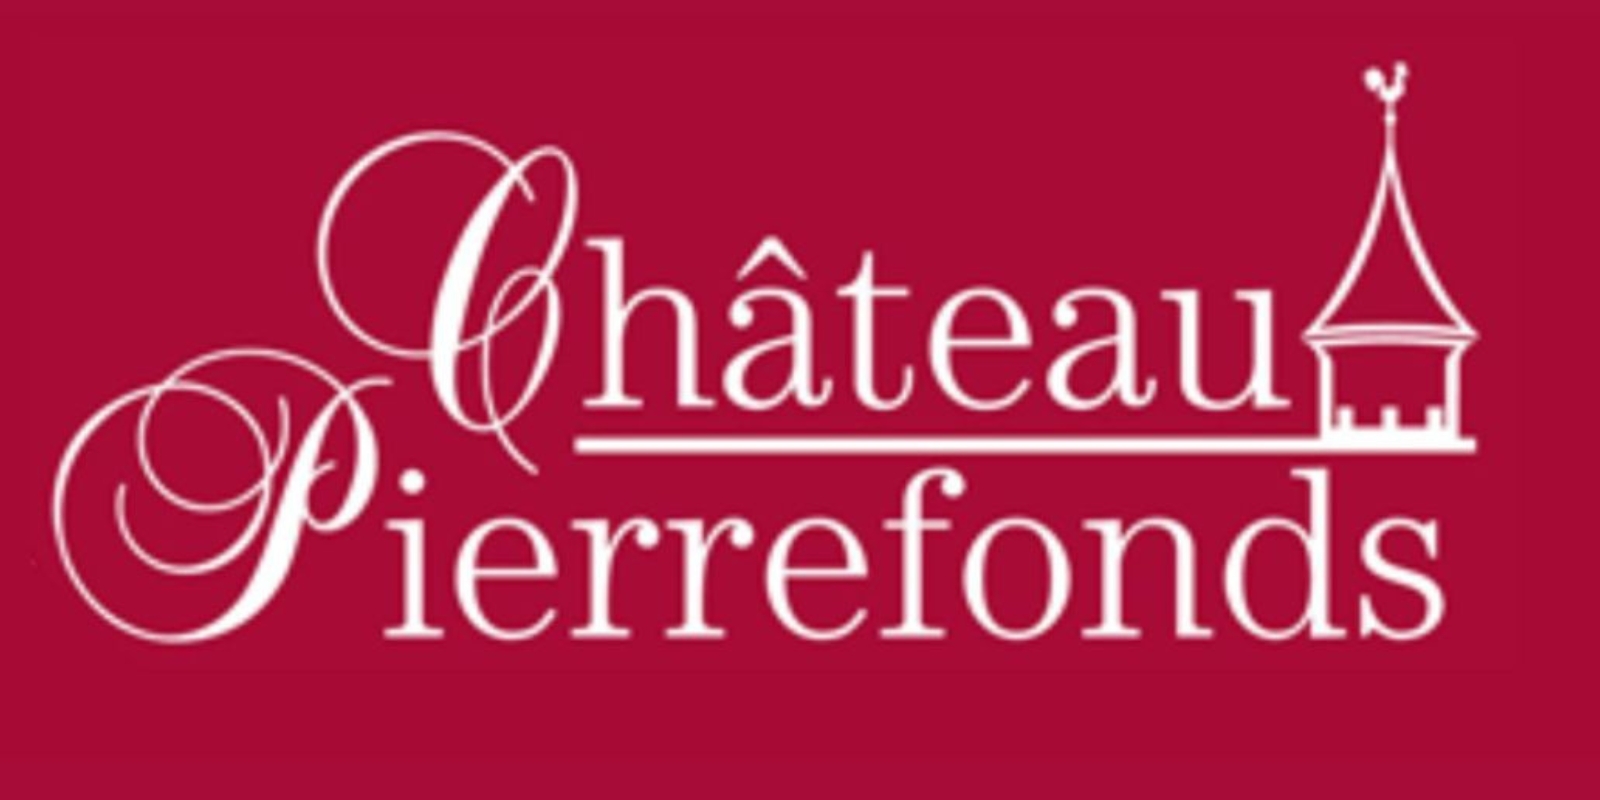 Chateau Pierrefonds Website Logo